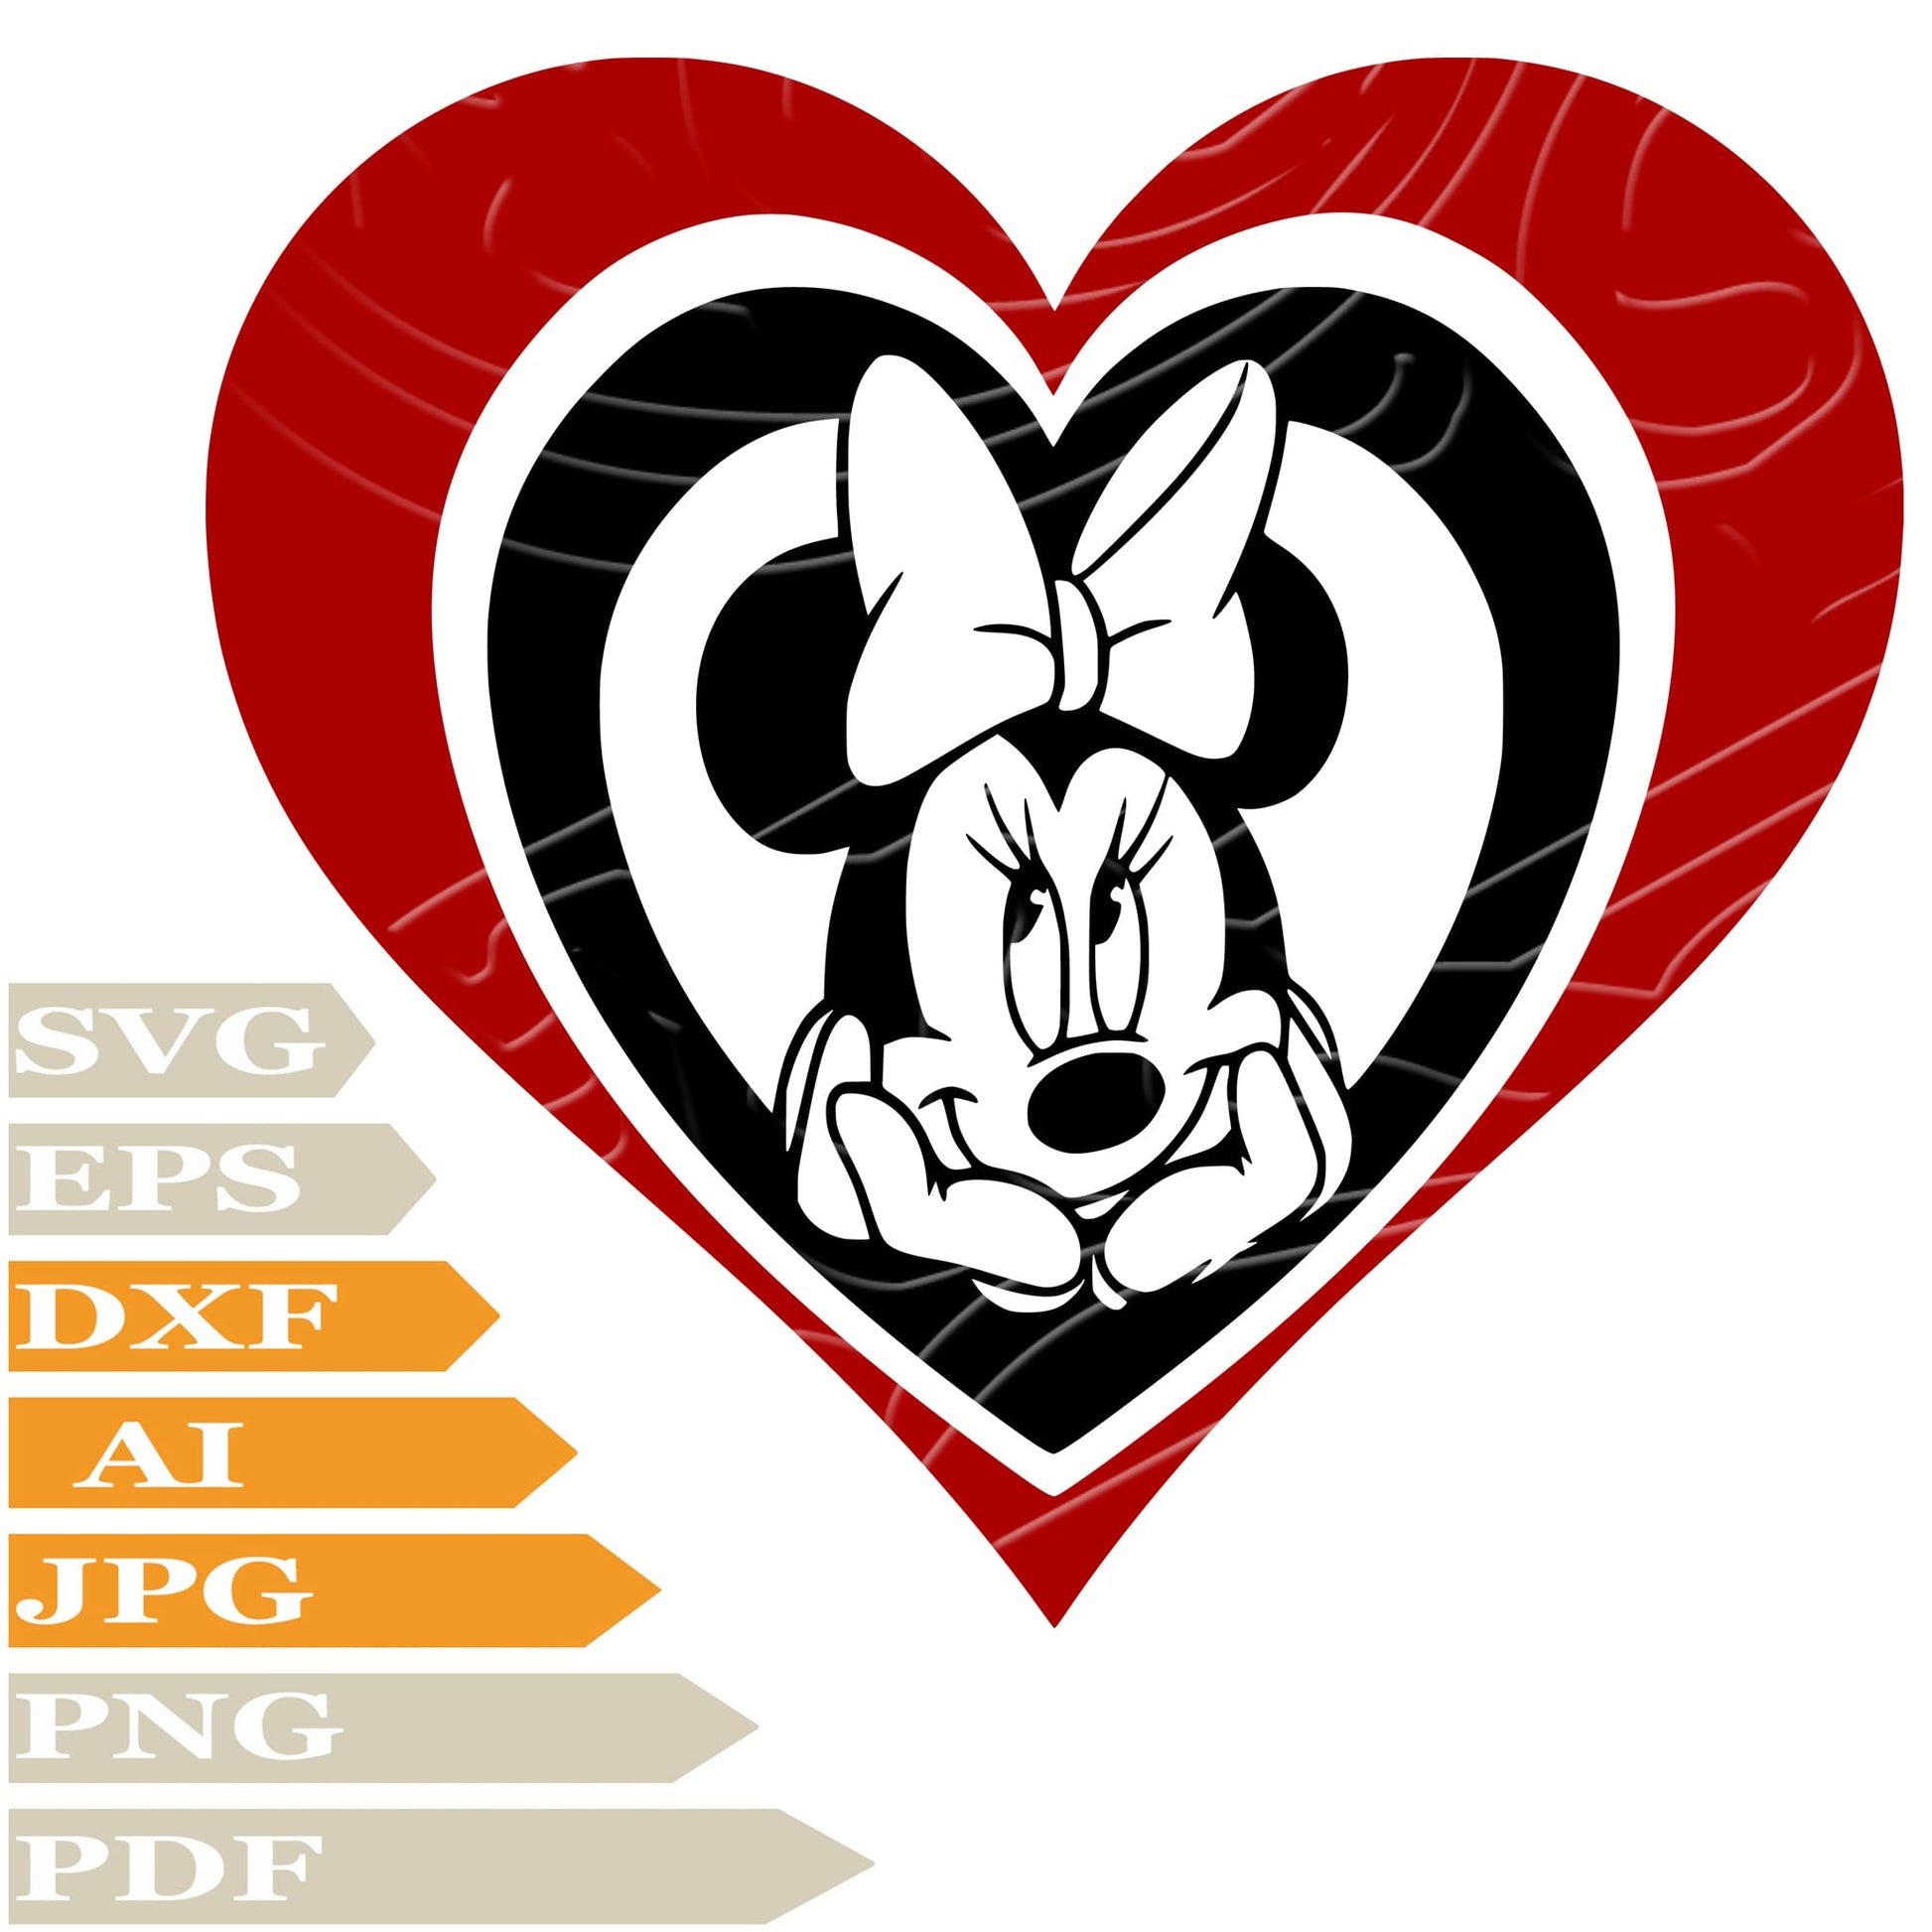 Minnie Mause SVG File, Minnie Mause In Heart Vector Graphics, Minnie Mause In Heart SVG Design, For Cricut, Cut File, Clipart, For Tattoo, Silhouette